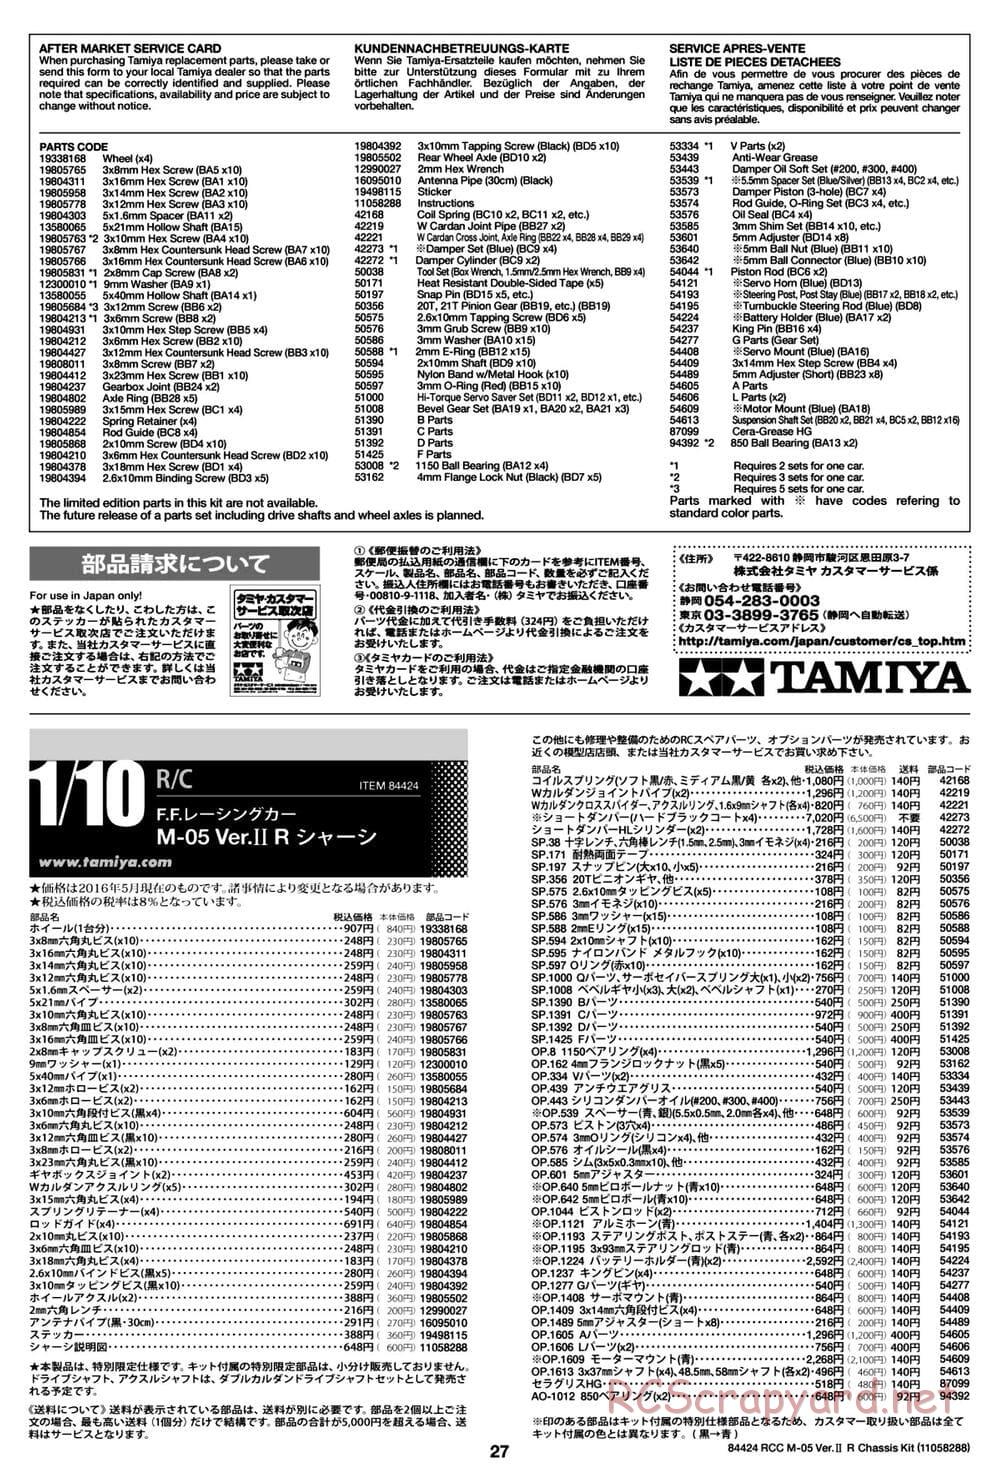 Tamiya - M-05 Ver.II R Chassis Chassis - Manual - Page 27